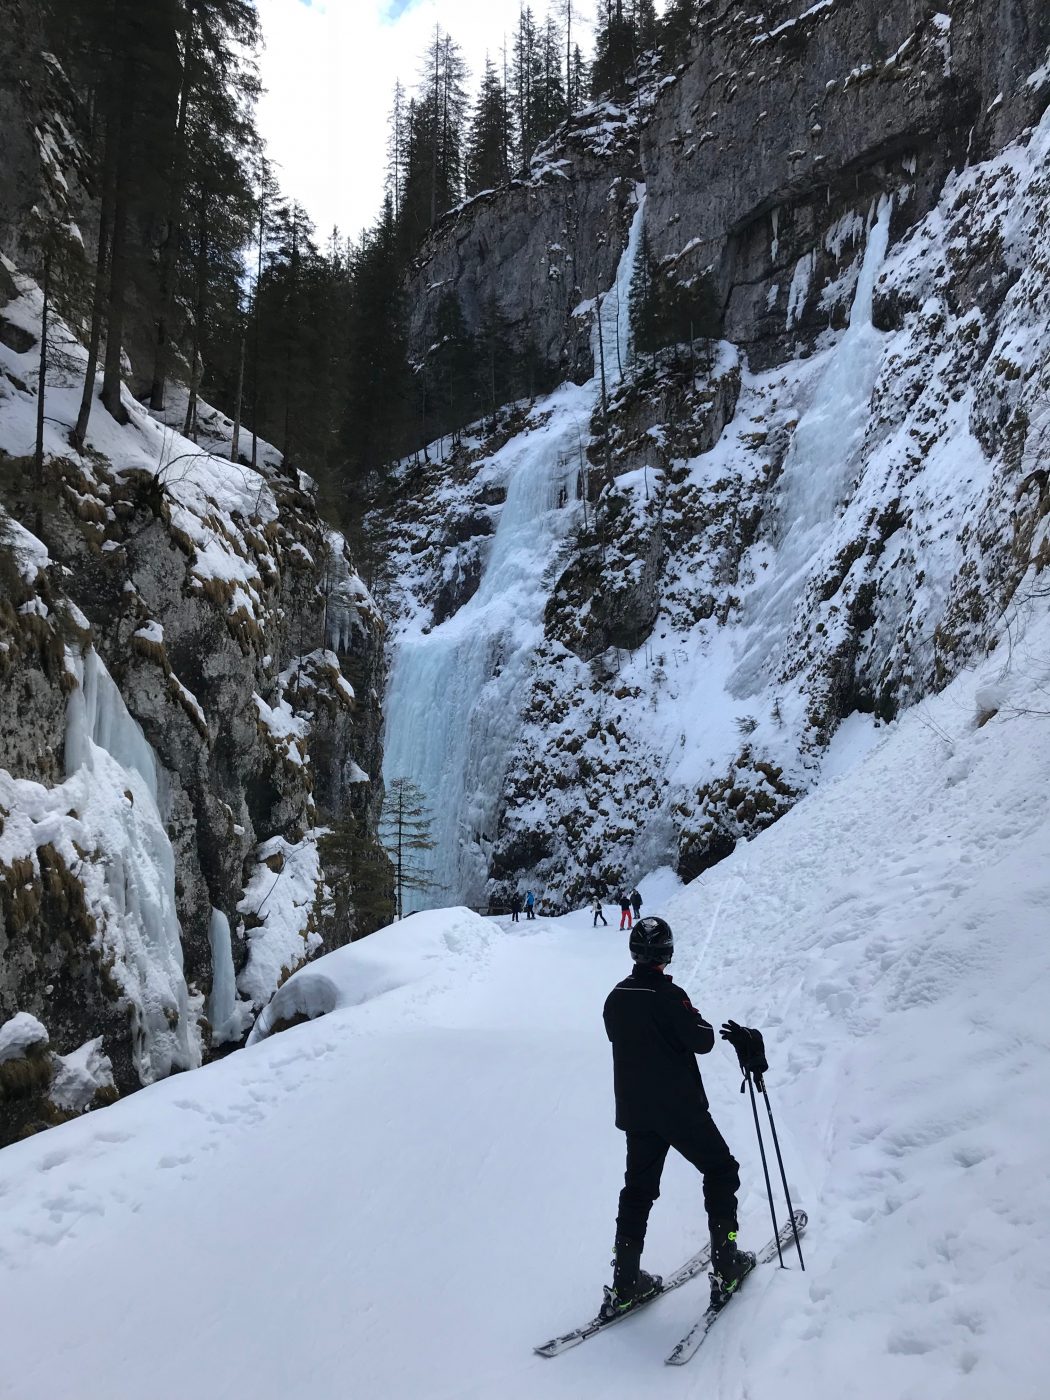 CharismaLook_Wasserfall_Schnee_Berge_Skifahrer_Skifahren_Skigruppe